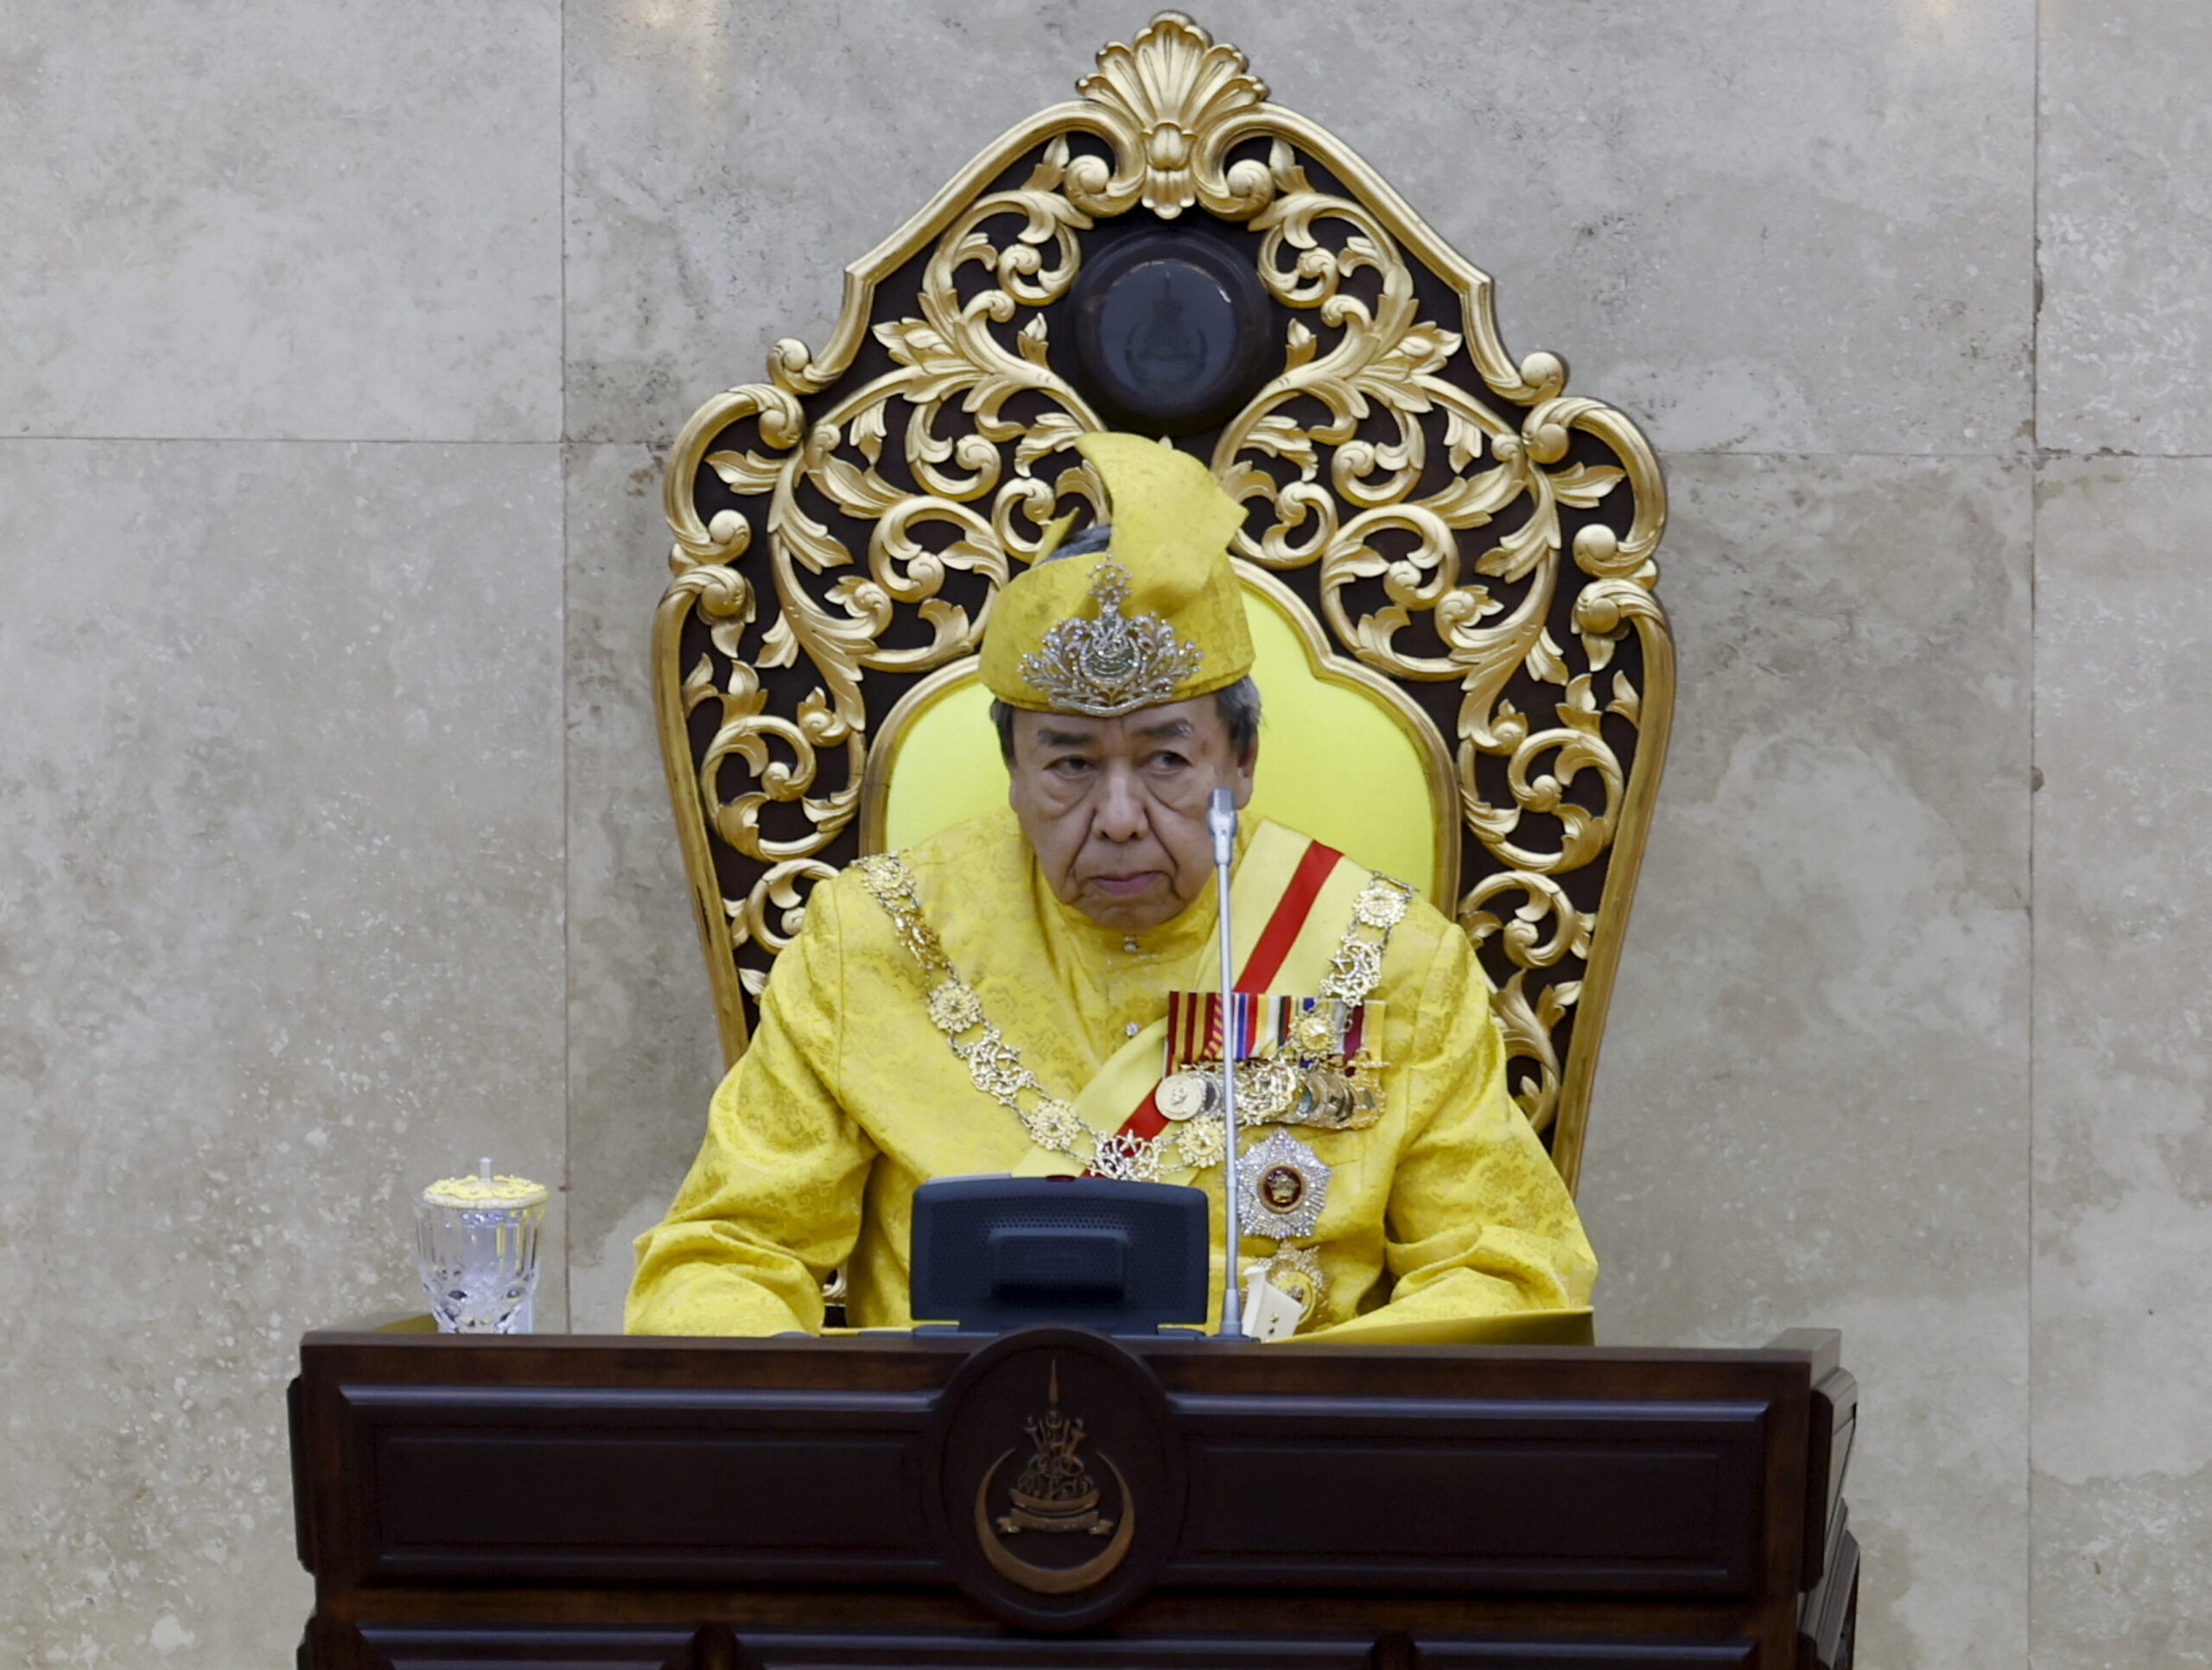 Selangor sultan pledges strict oversight of civil service performance